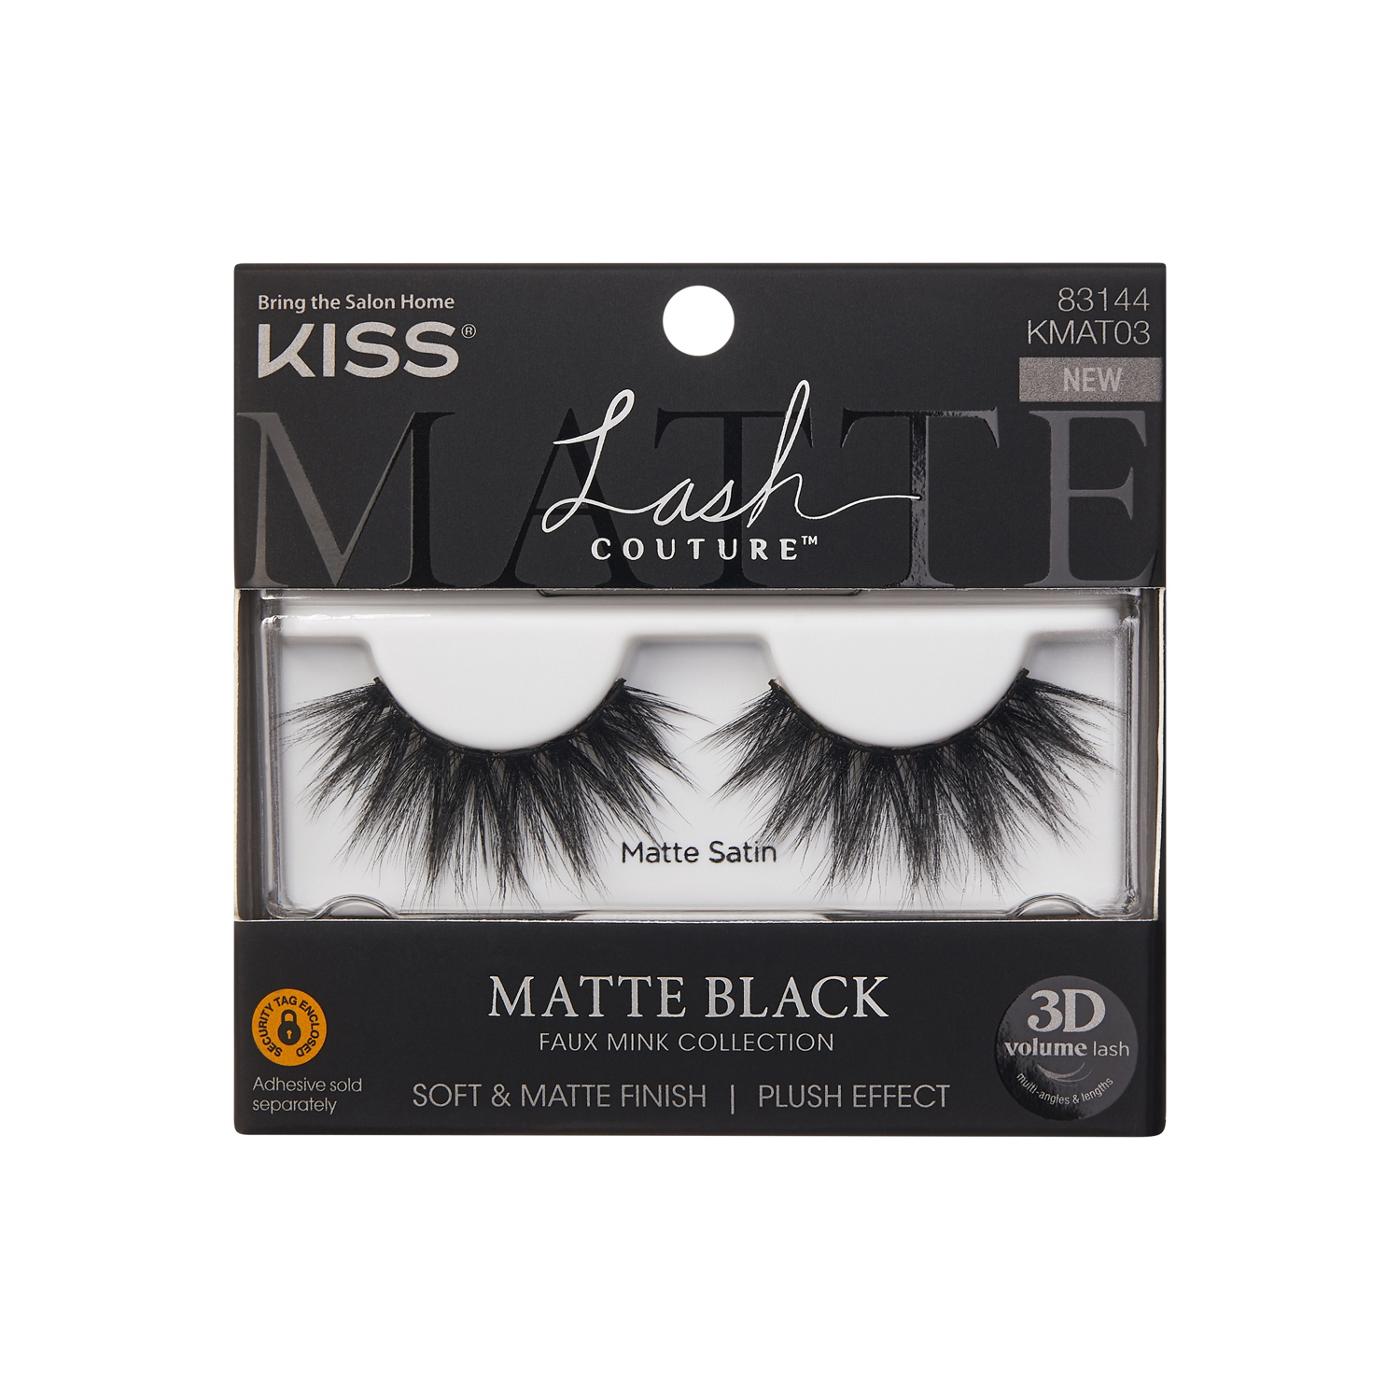 KISS Lash Couture Faux Mink Collection - Matte Satin; image 1 of 7